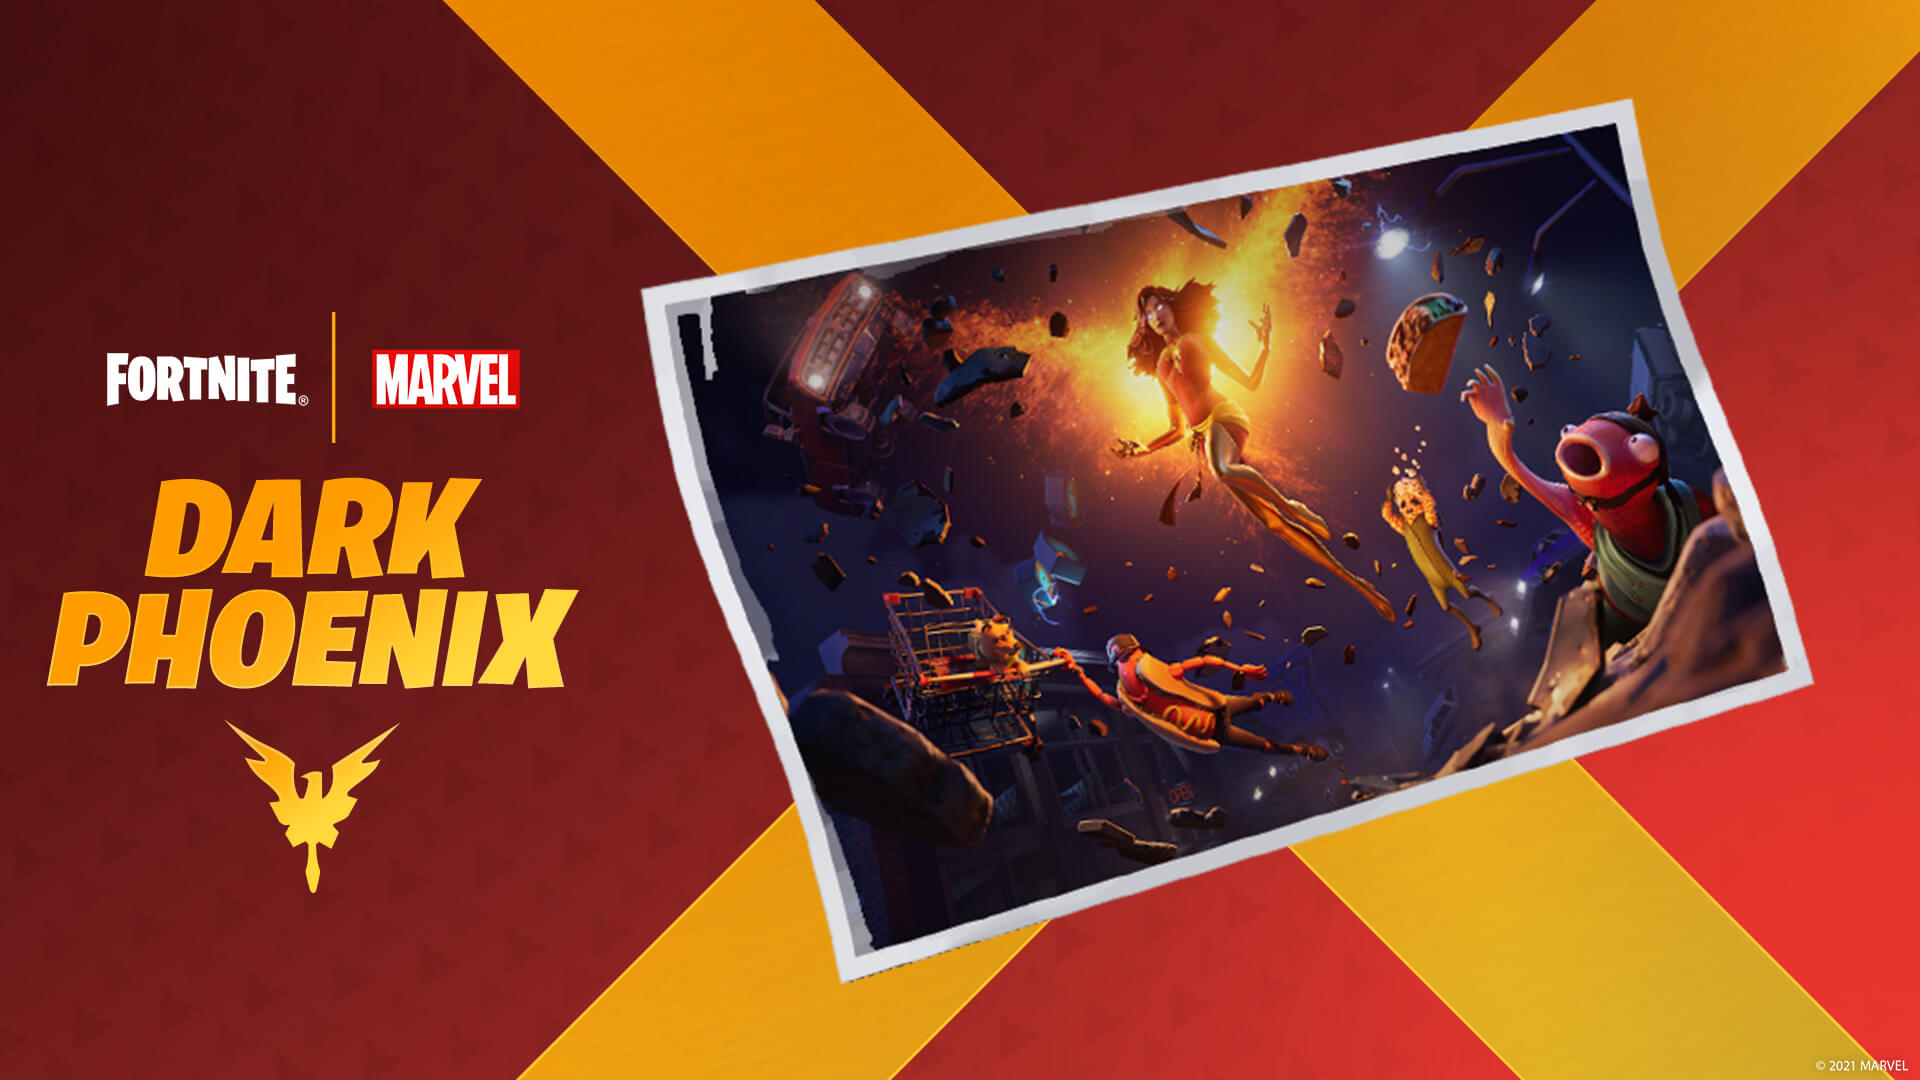 Dark Phoenix joins Fortnite in latest Marvel collaboration